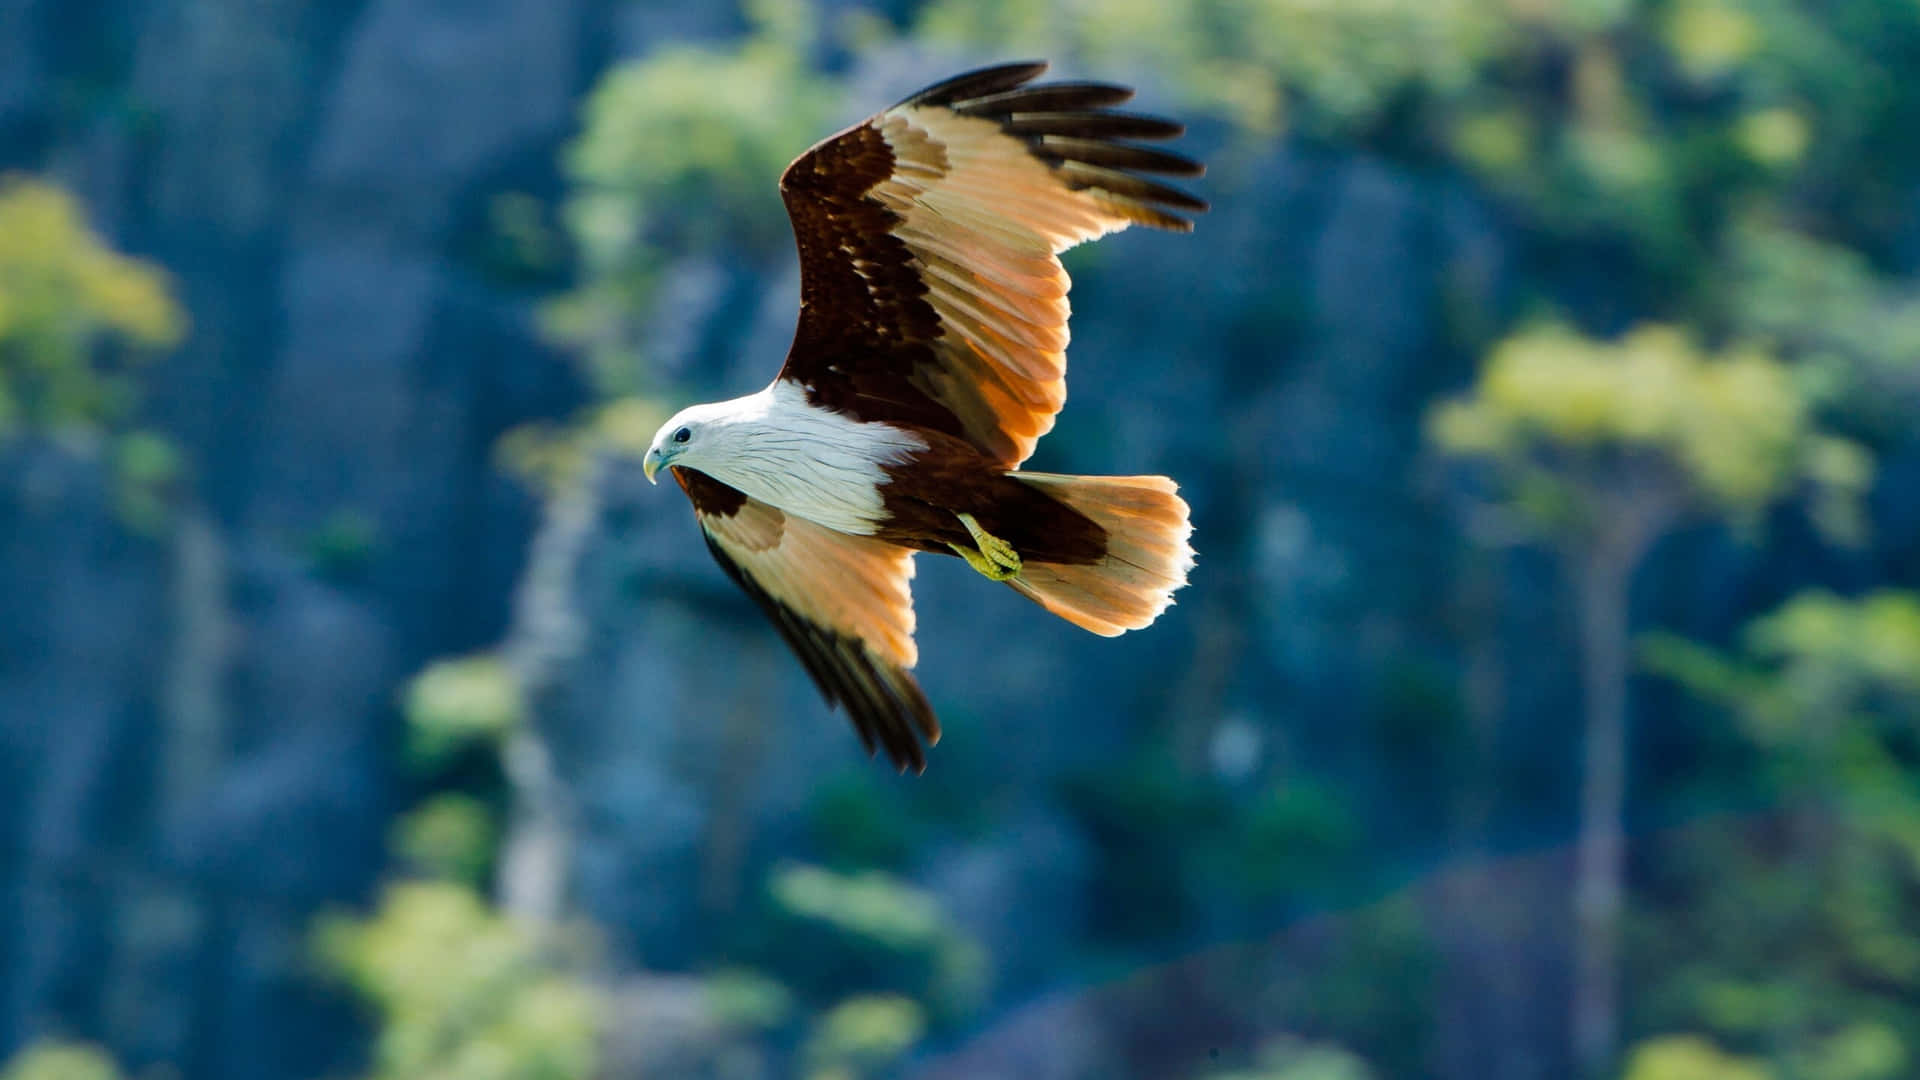 philippine eagle flying hd